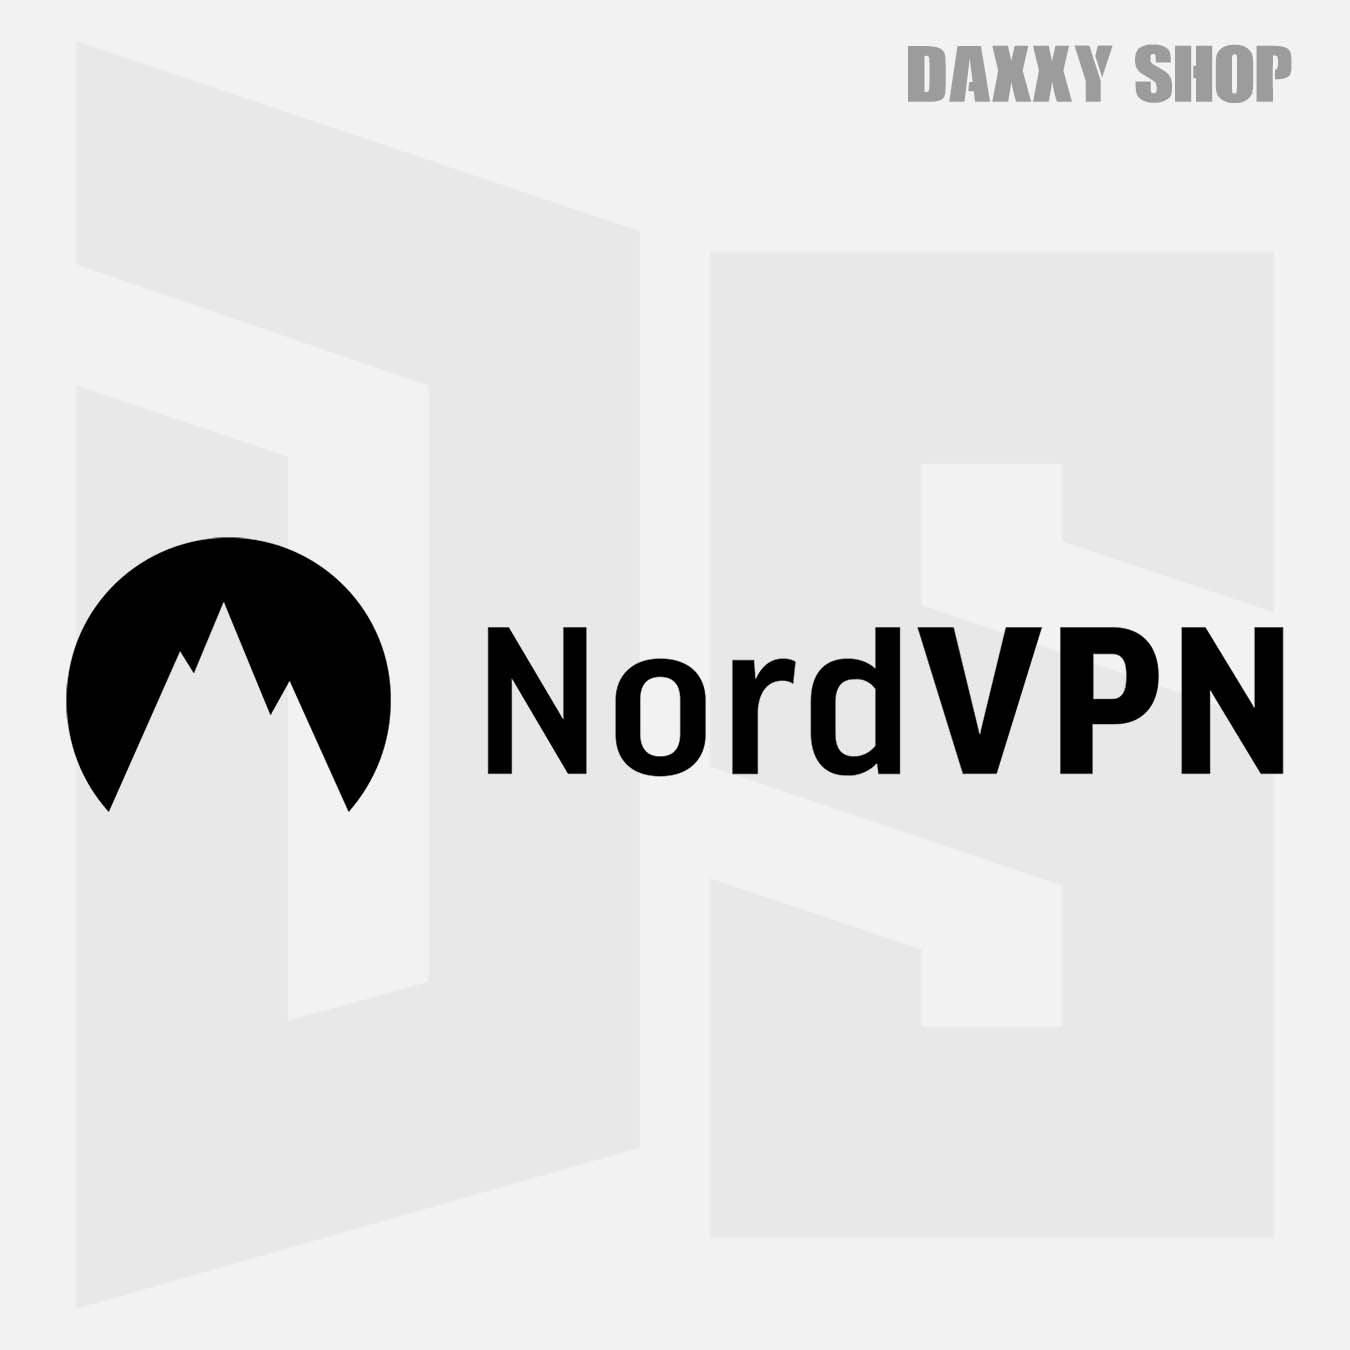 Nord VPN - daxxyshop.com